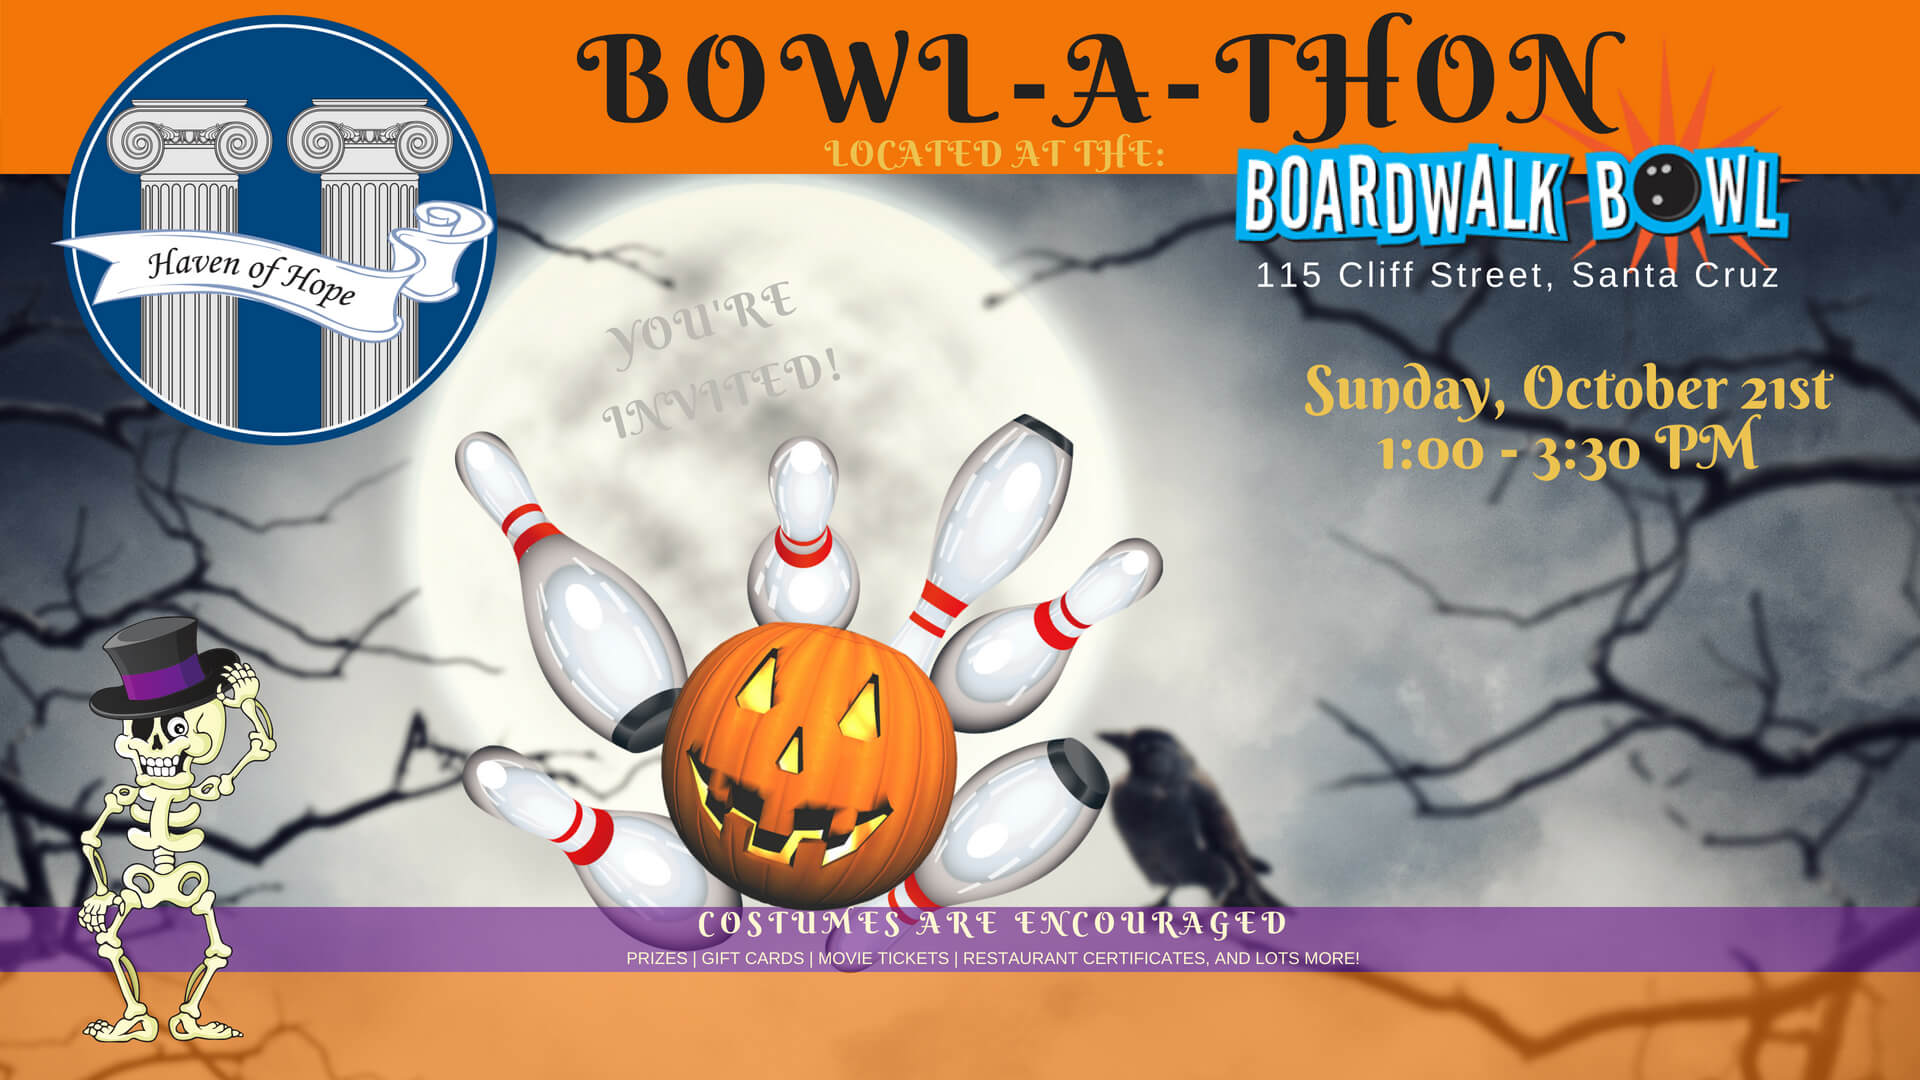 Bowl-a-thon 2018 @ Boardwalk Bowl | Santa Cruz | California | United States